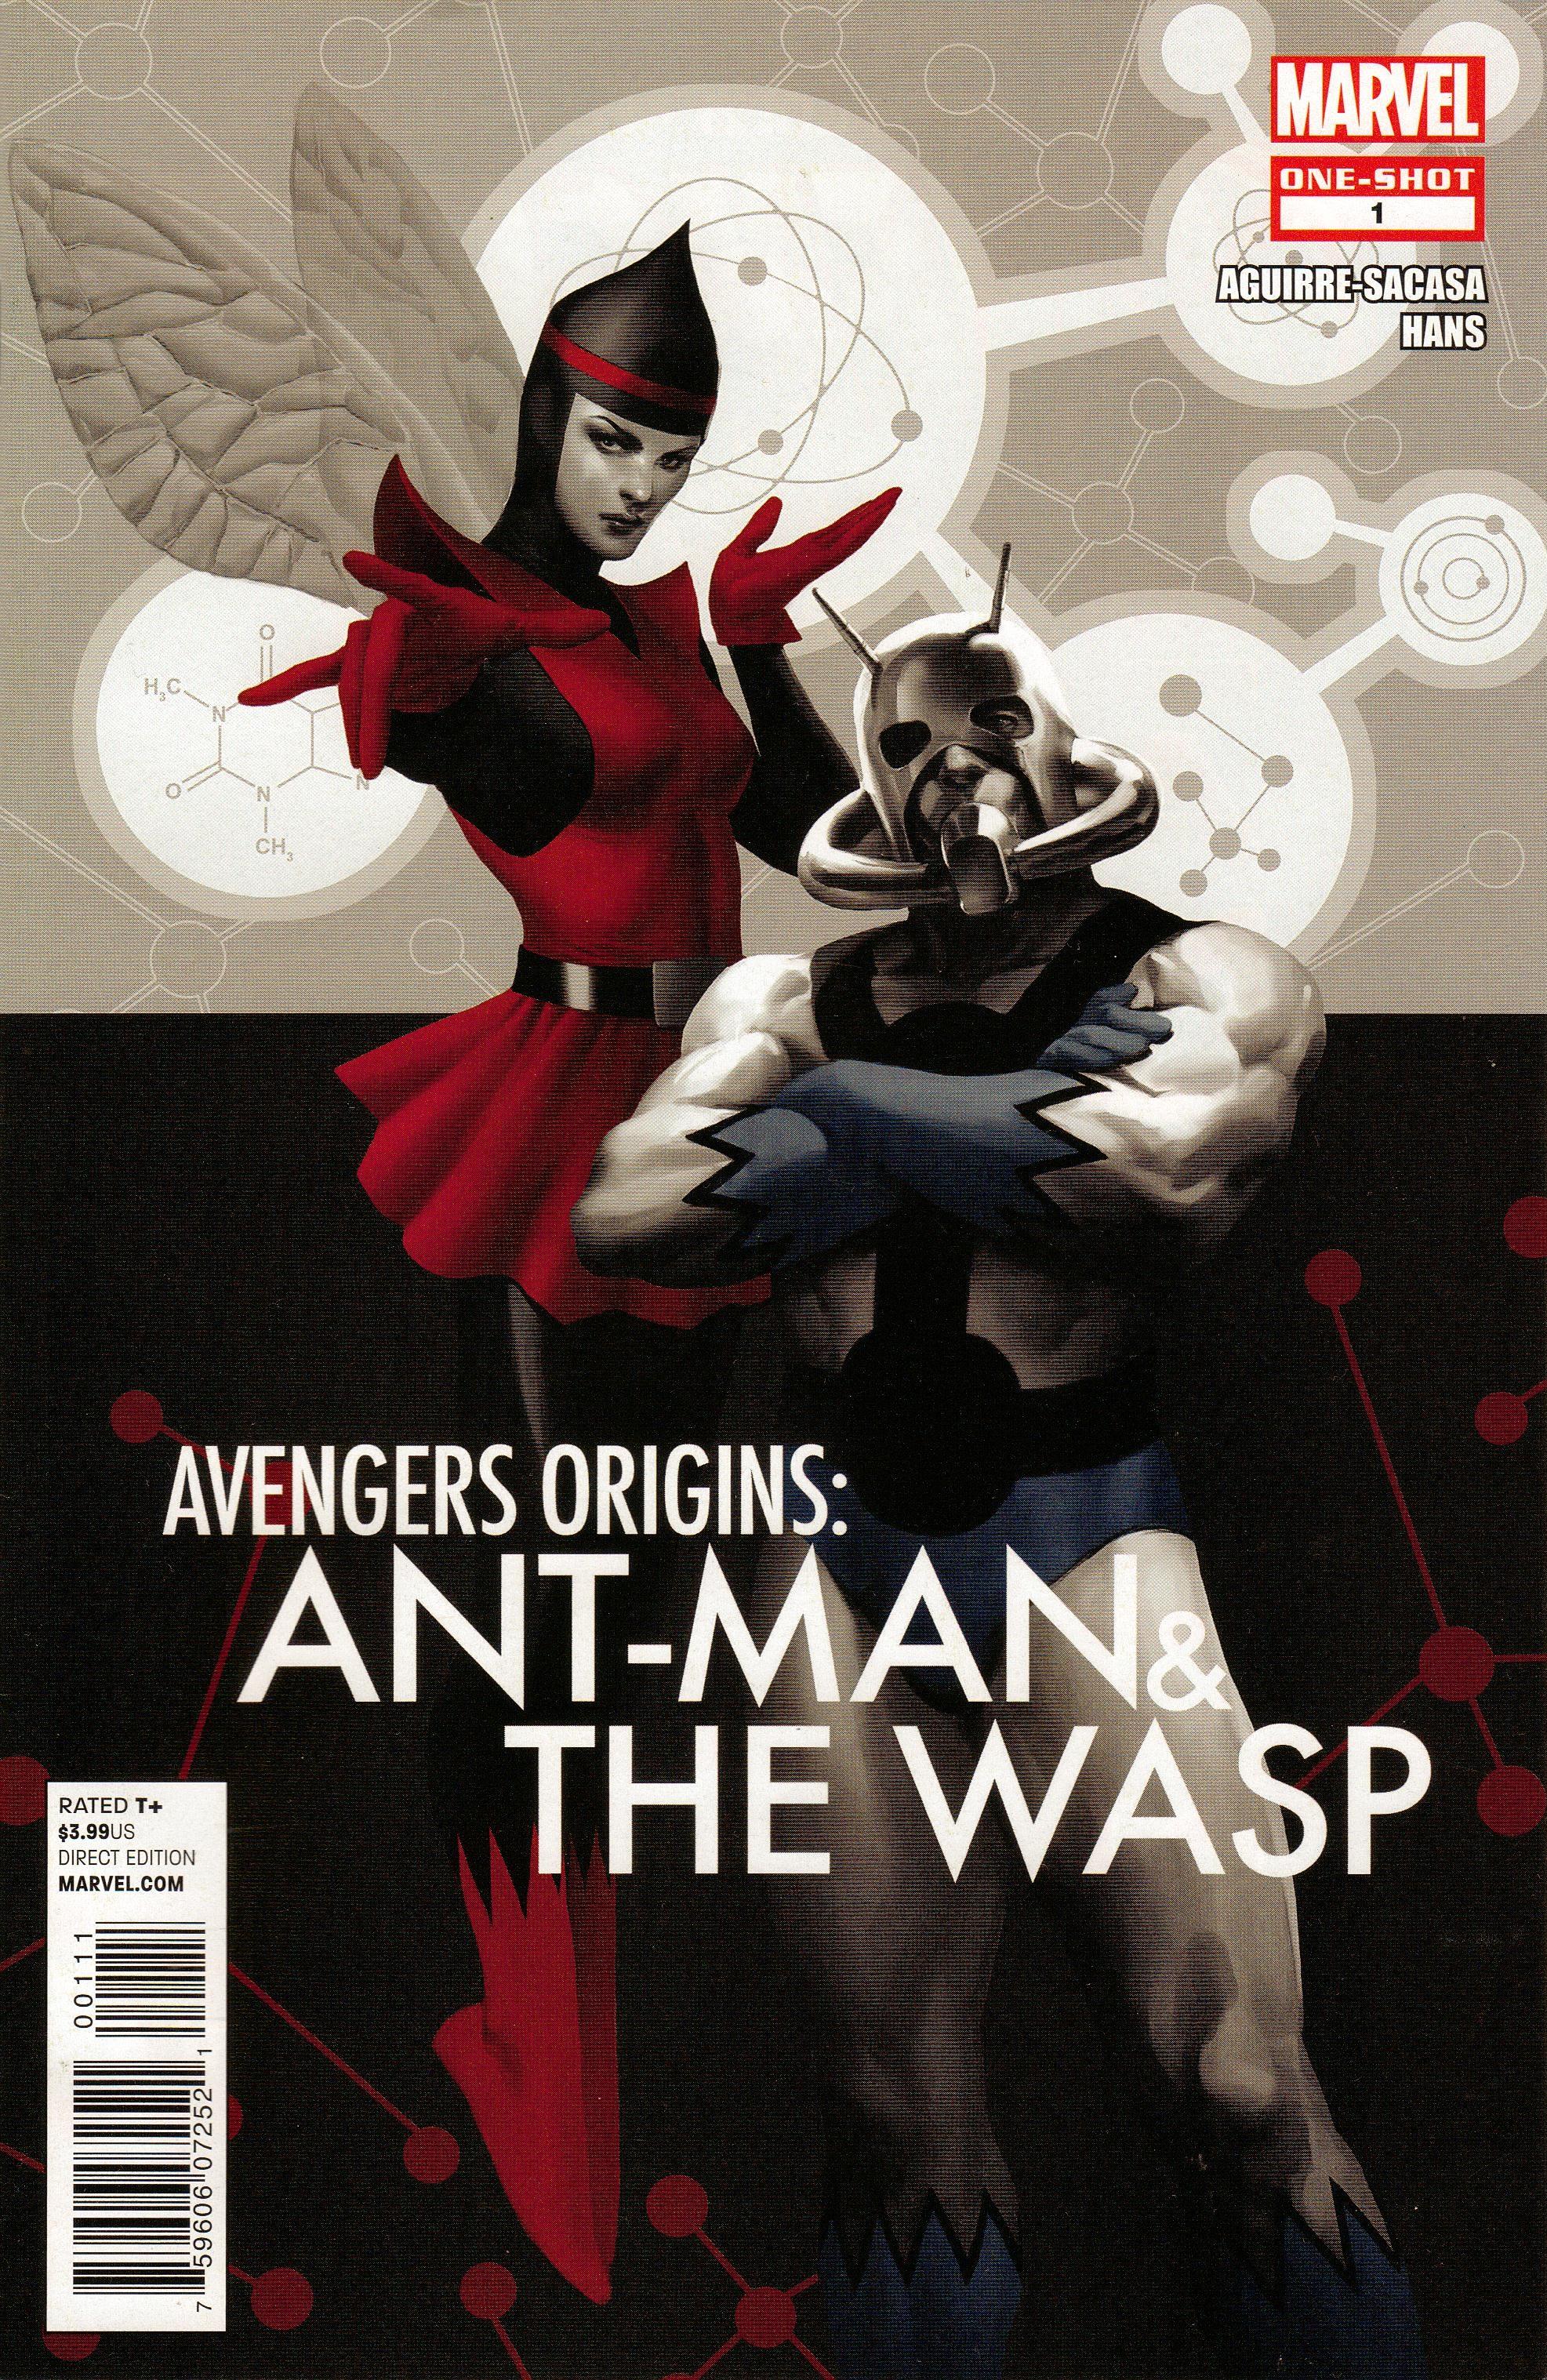 Avengers Origins: Ant-Man & the Wasp Vol. 1 #1